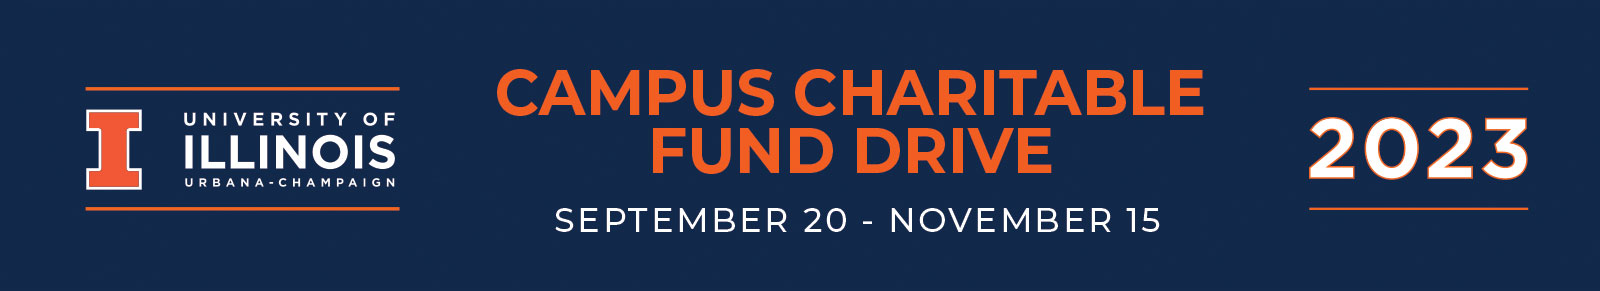 Campus Charitable Fund Drive September 26 - November 16, 2022